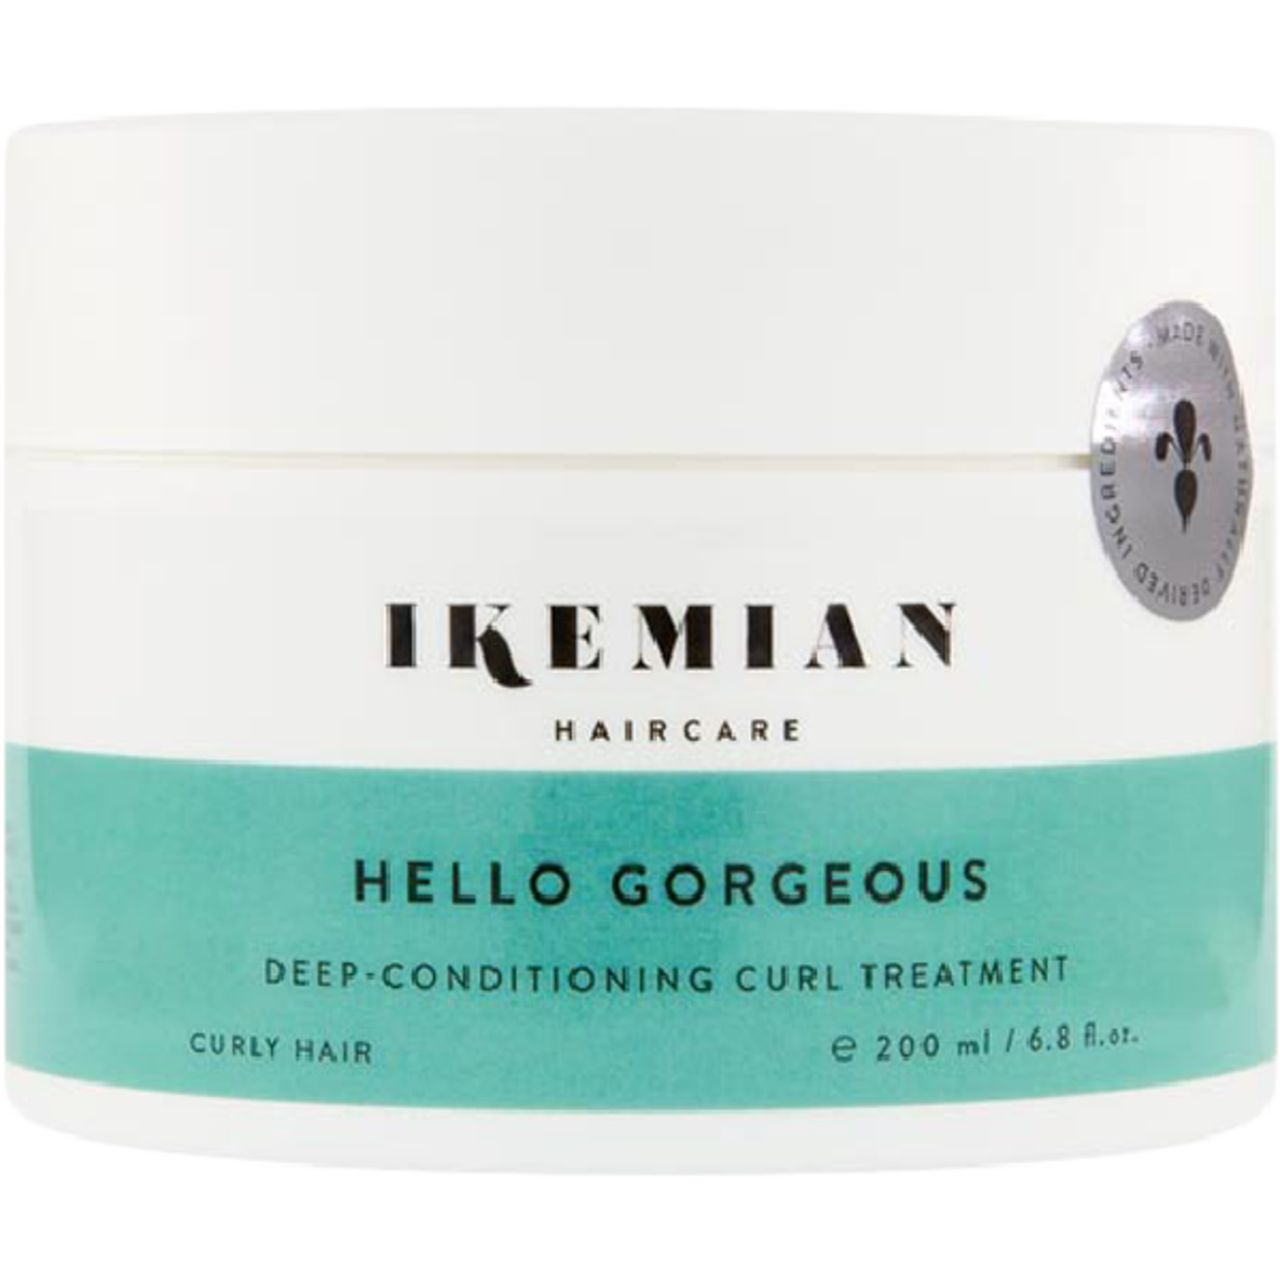 Ikemian, Hello Gorgeous Deep Conditioner Treatment